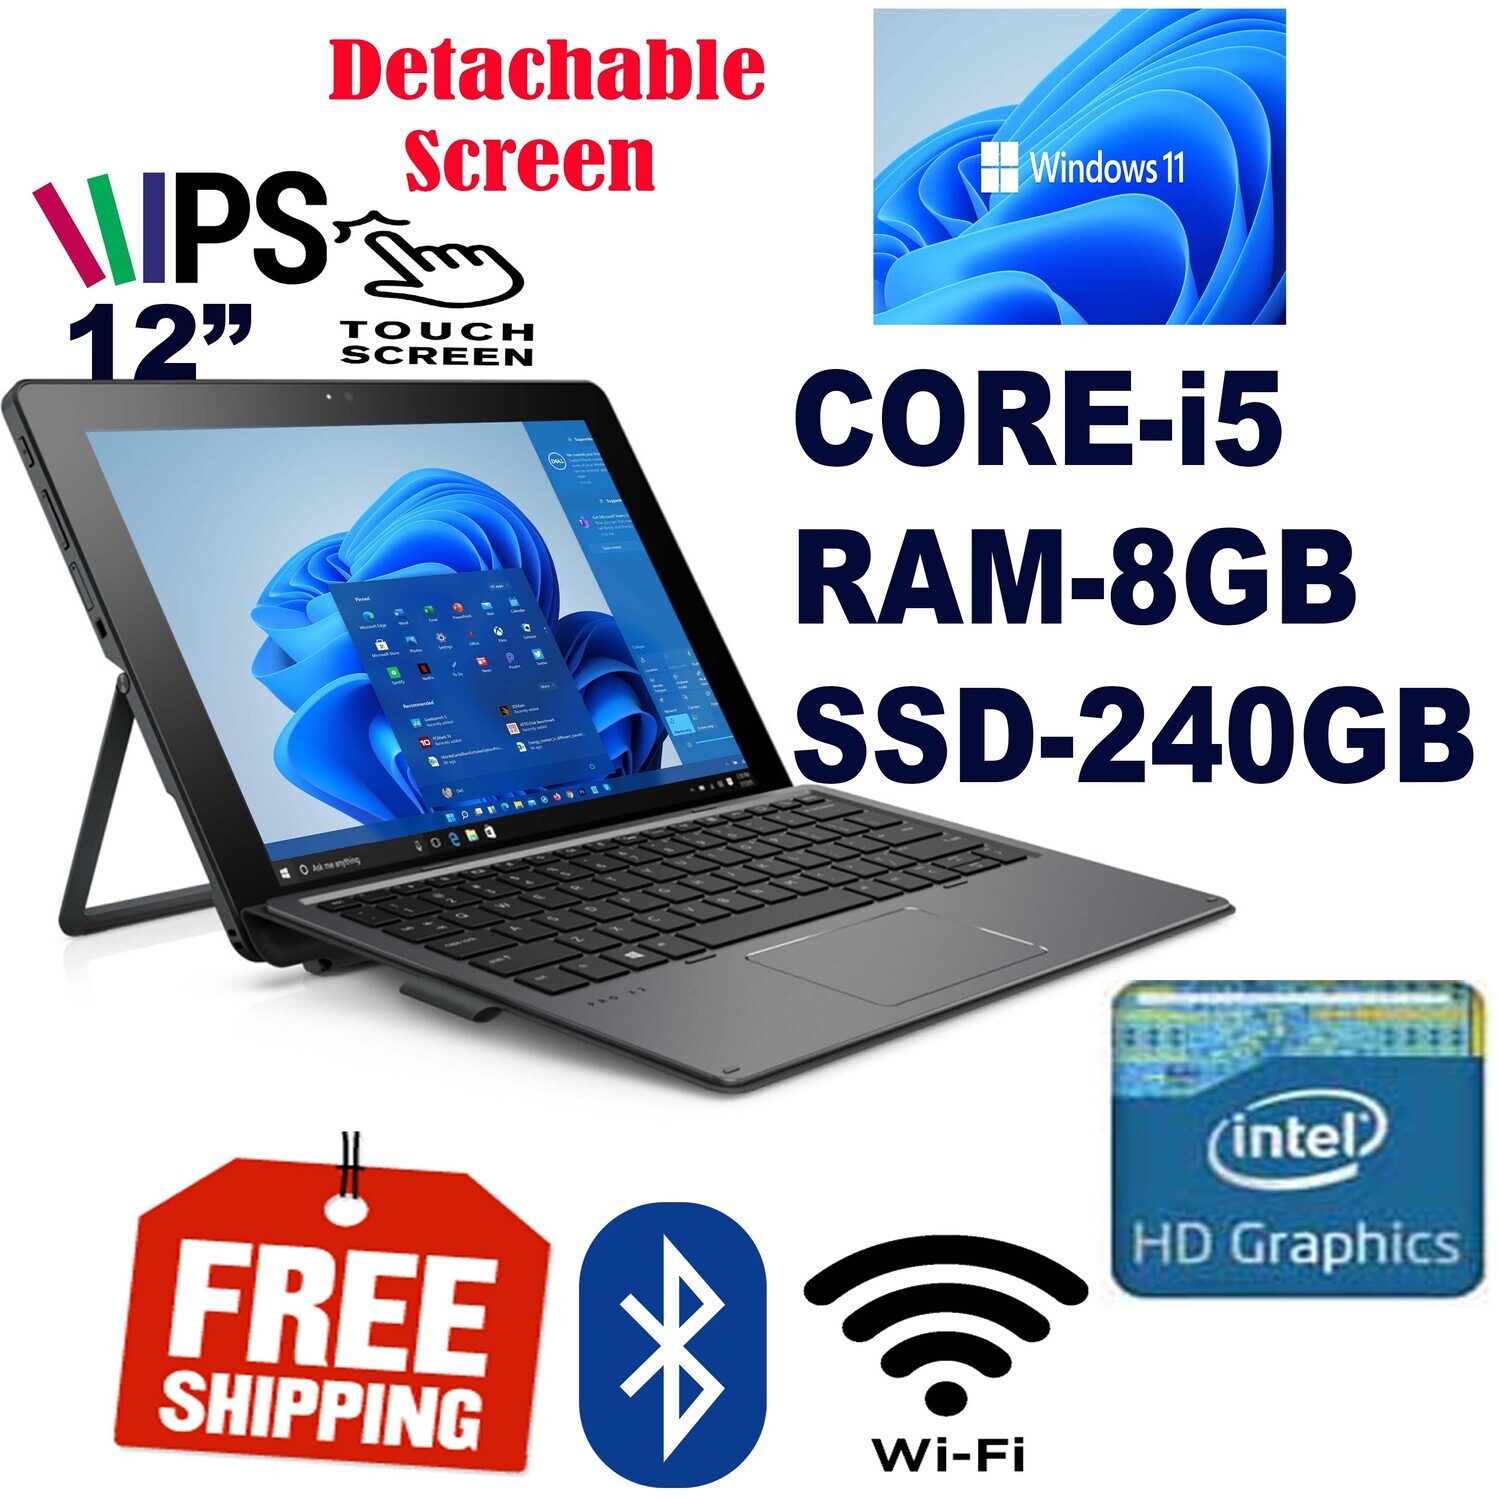 HP Pro X2 612 G2 Touchscreen Detachable FHD Laptop i5 1.6GHz 8GB 240GB SSD Win11